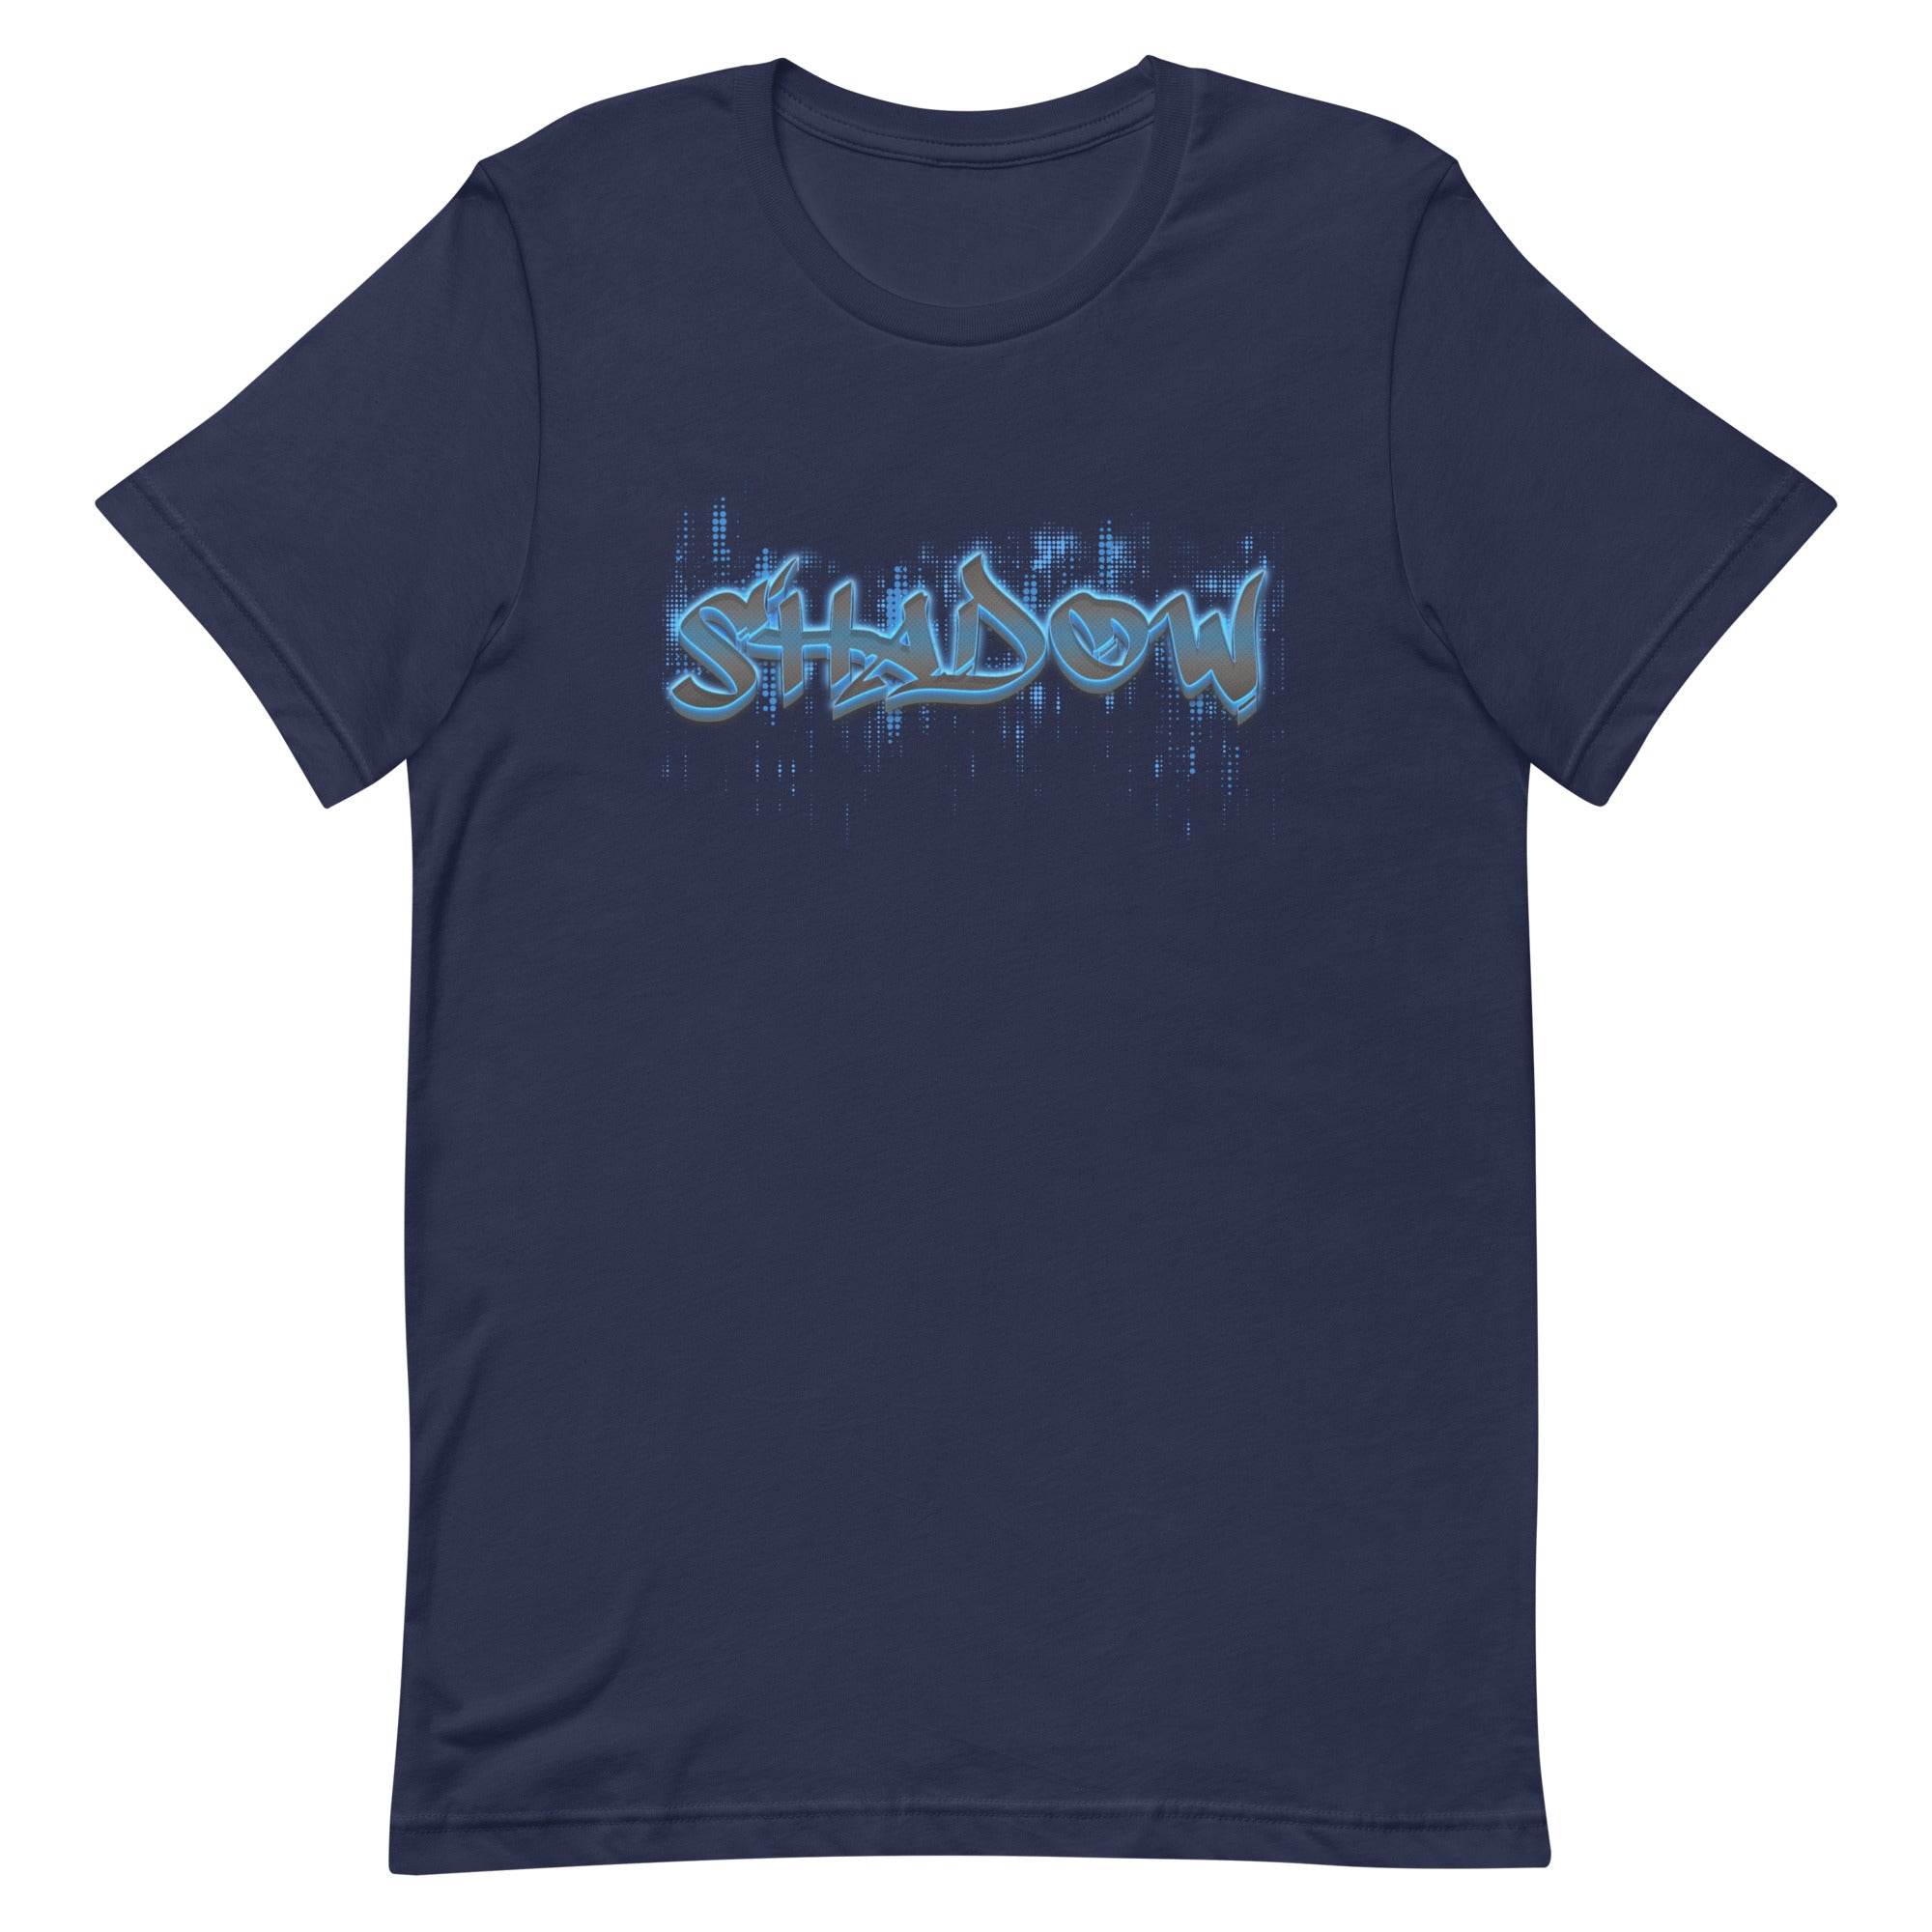 Shadow - Unisex t-shirt